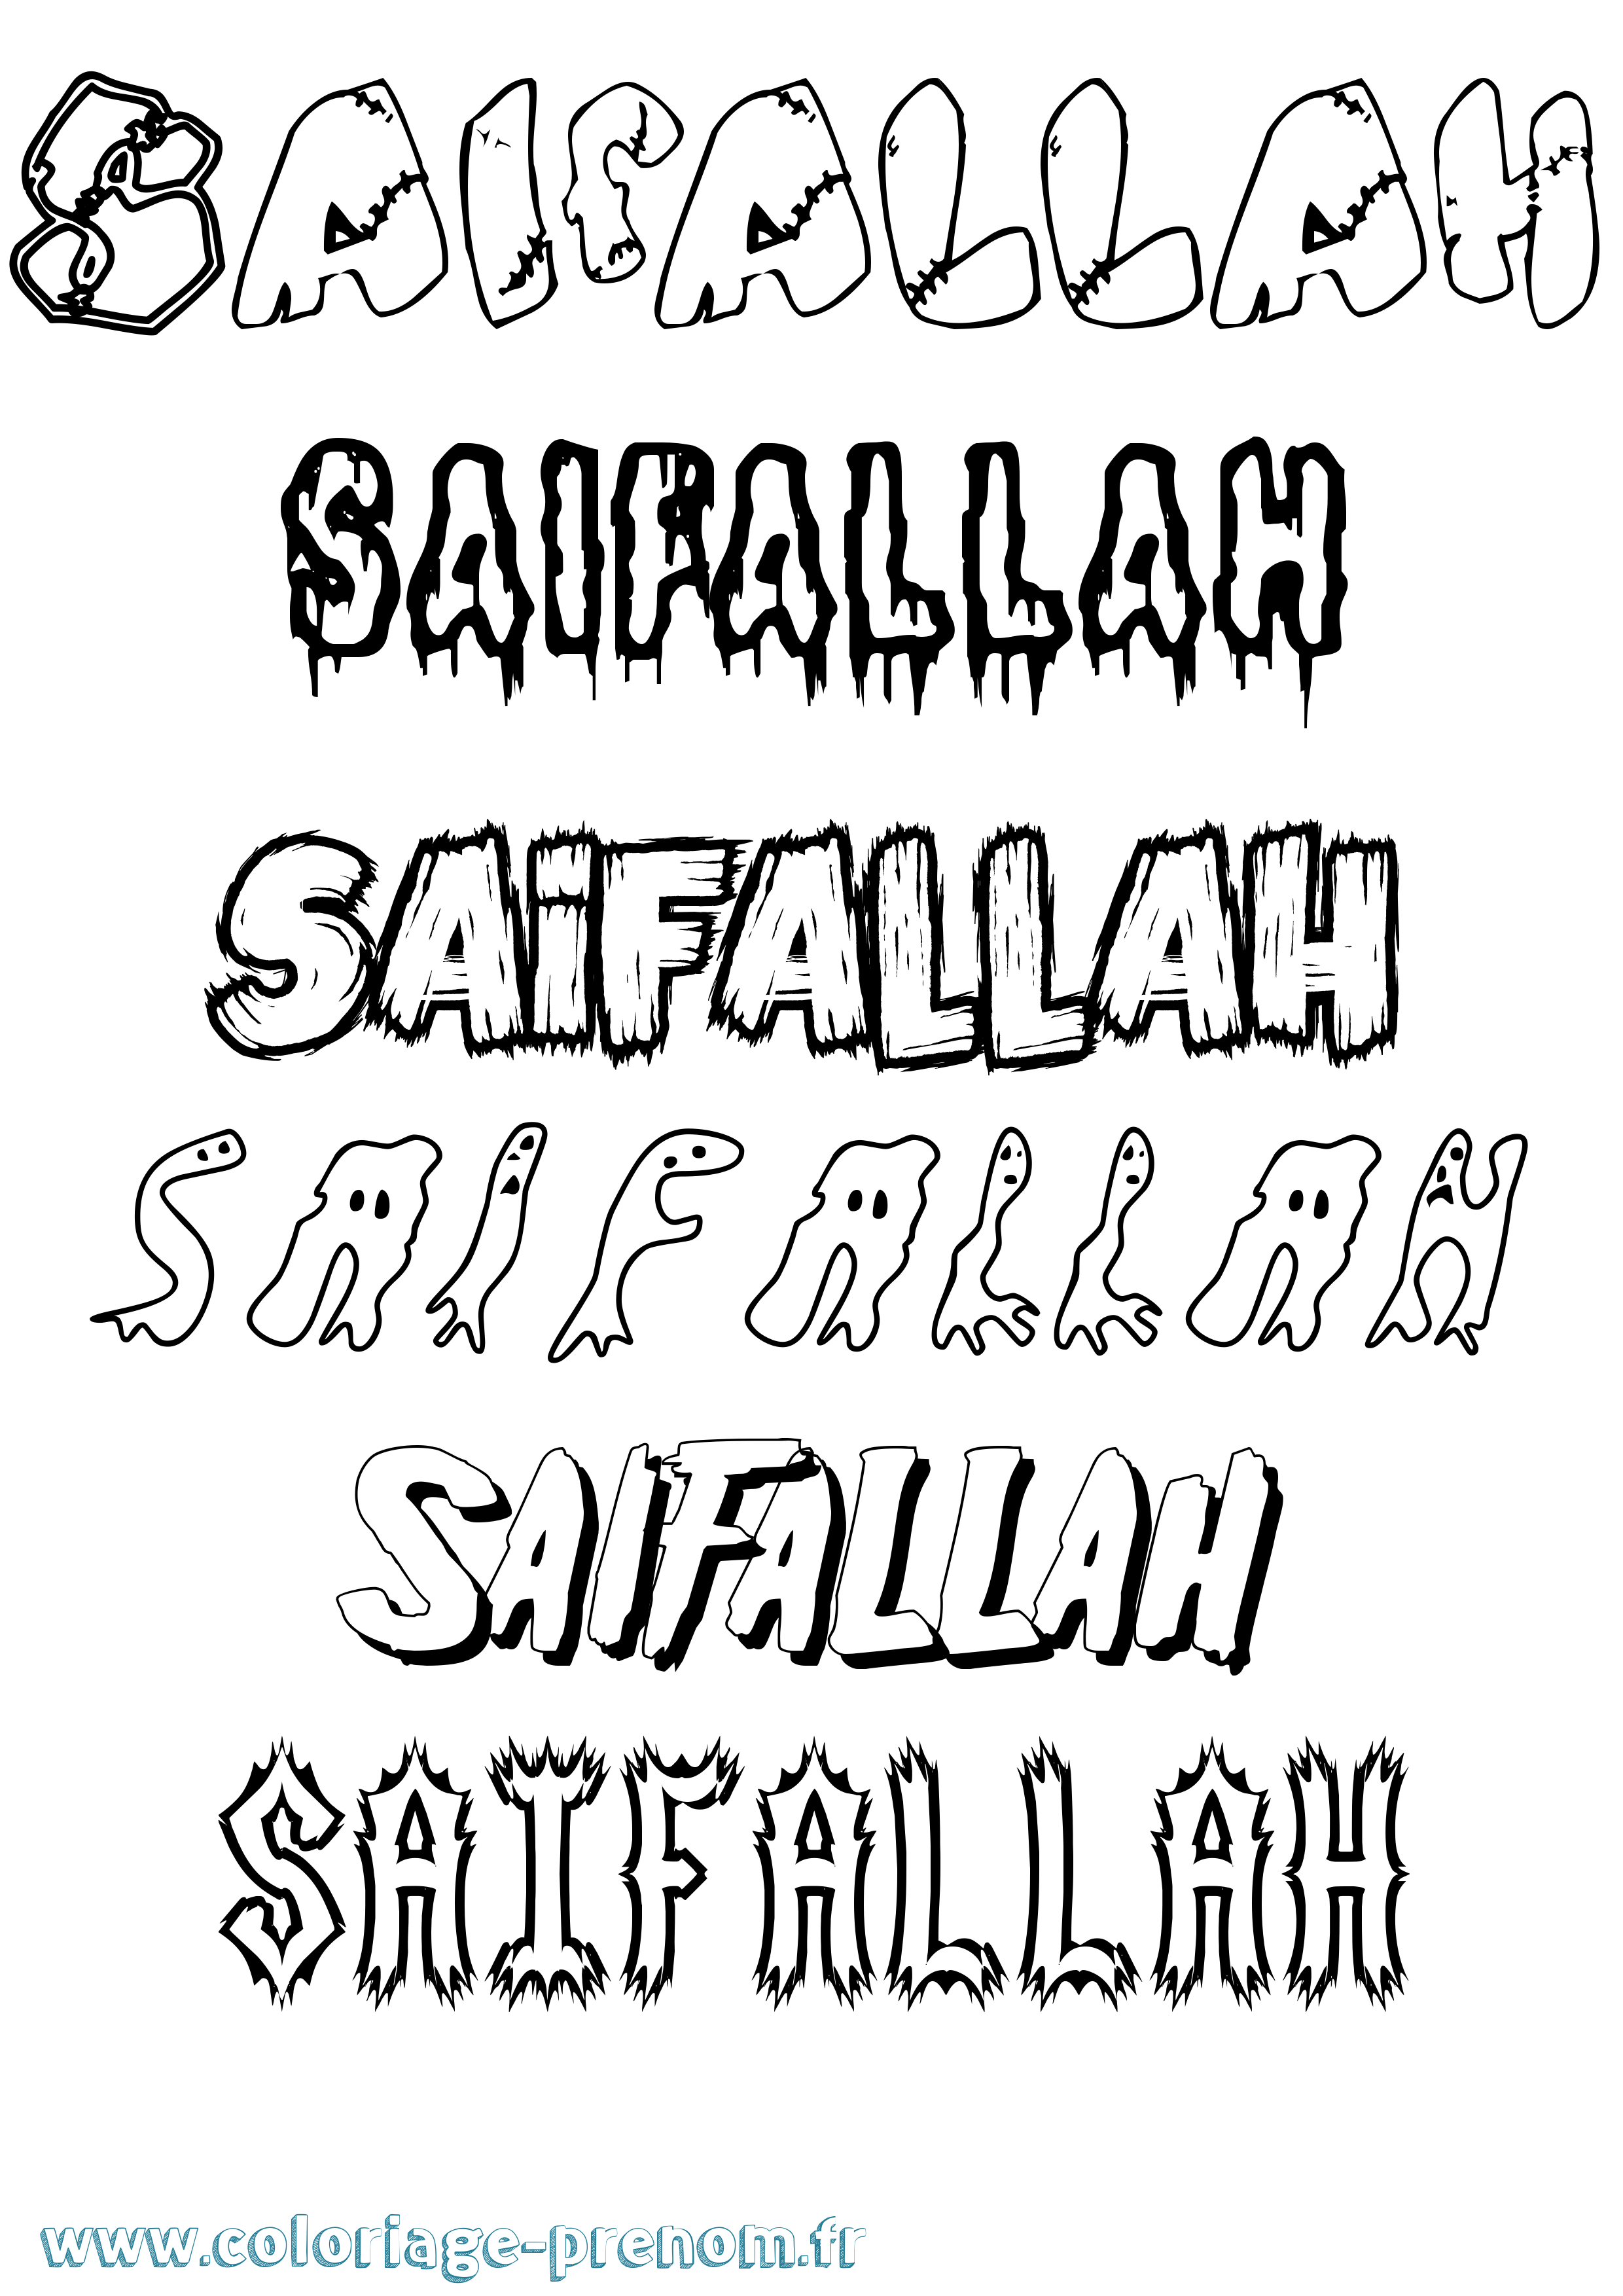 Coloriage prénom Saifallah Frisson